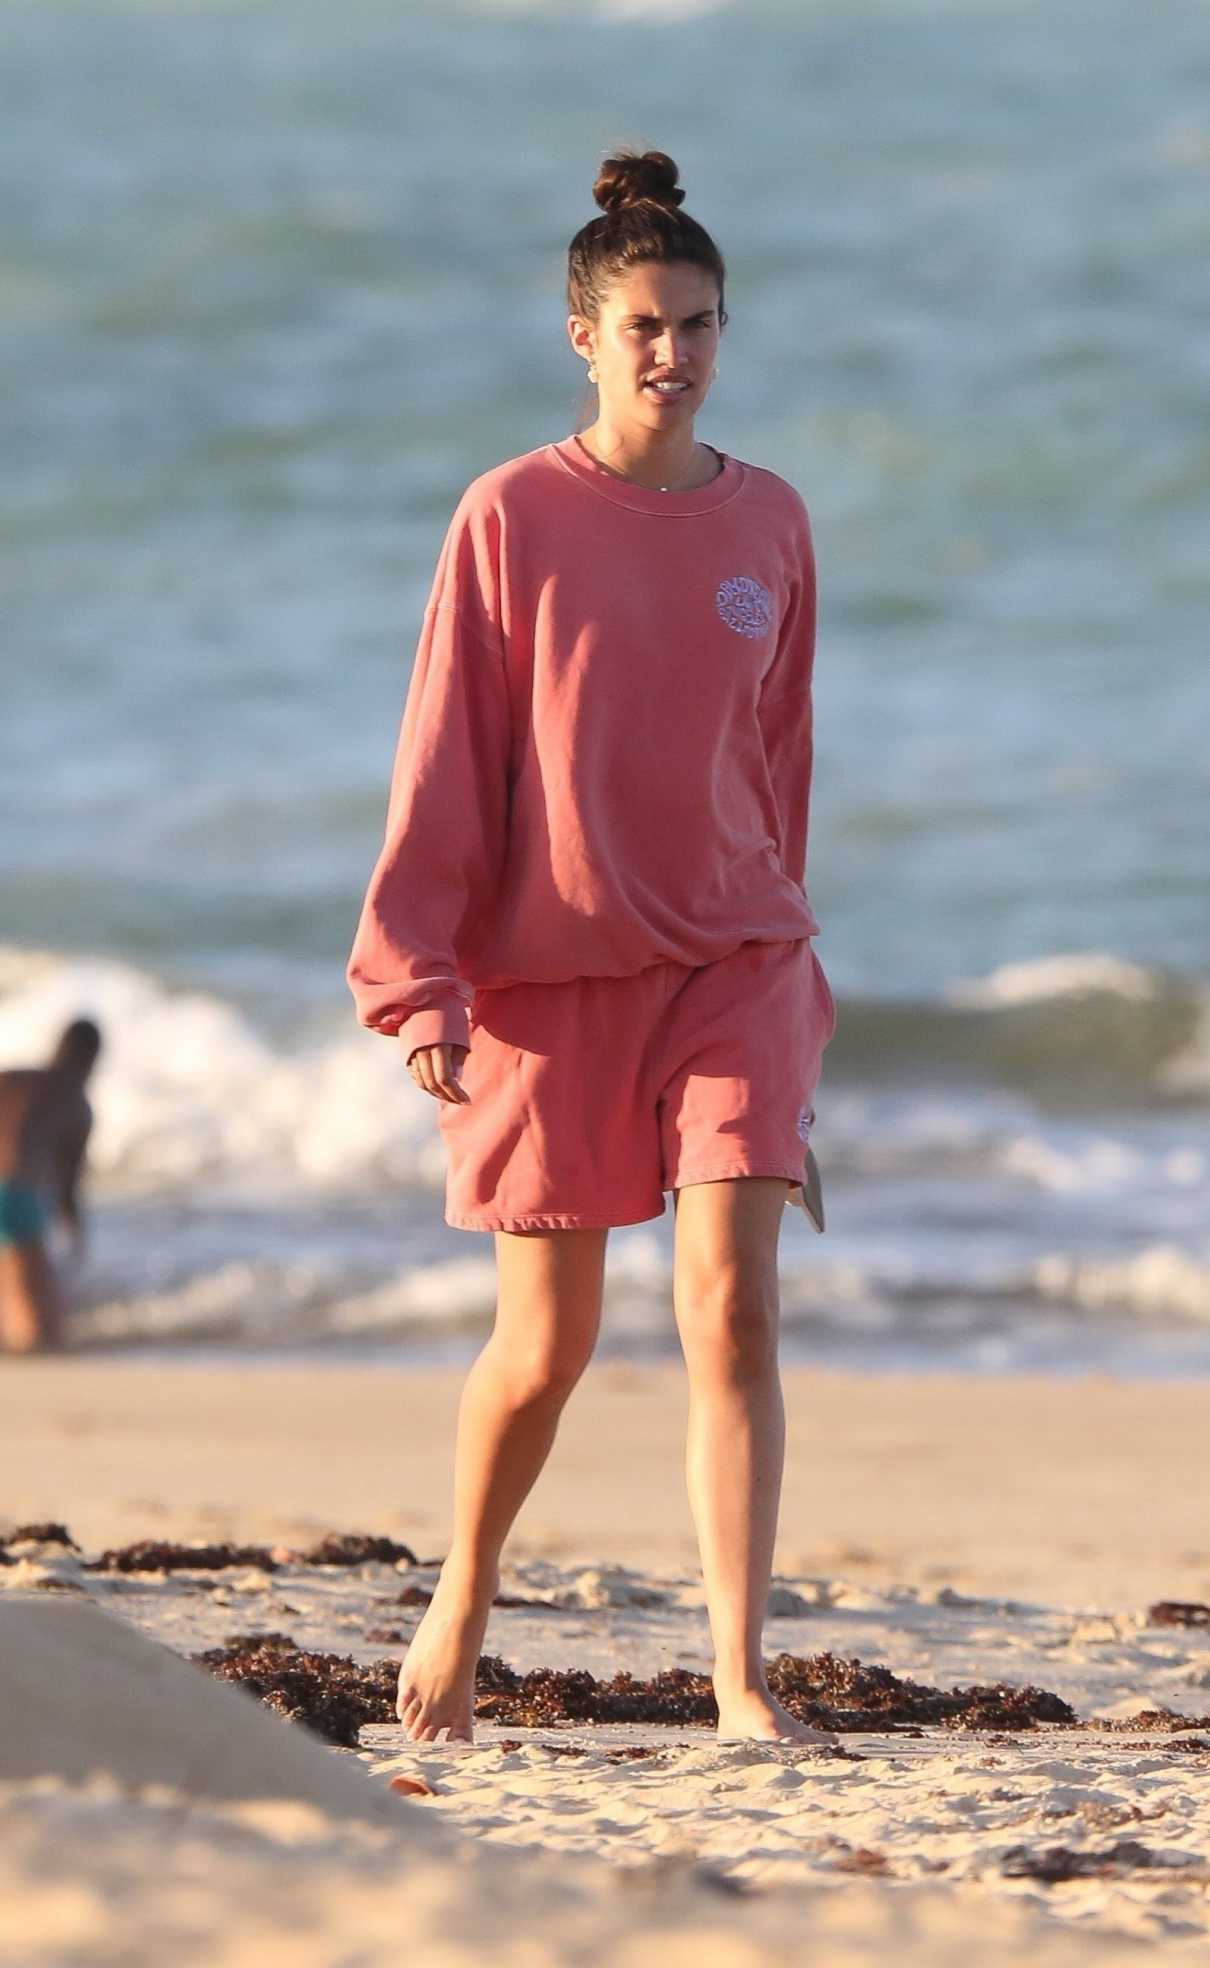 Sara Sampaio in a Pink Sweatshirt